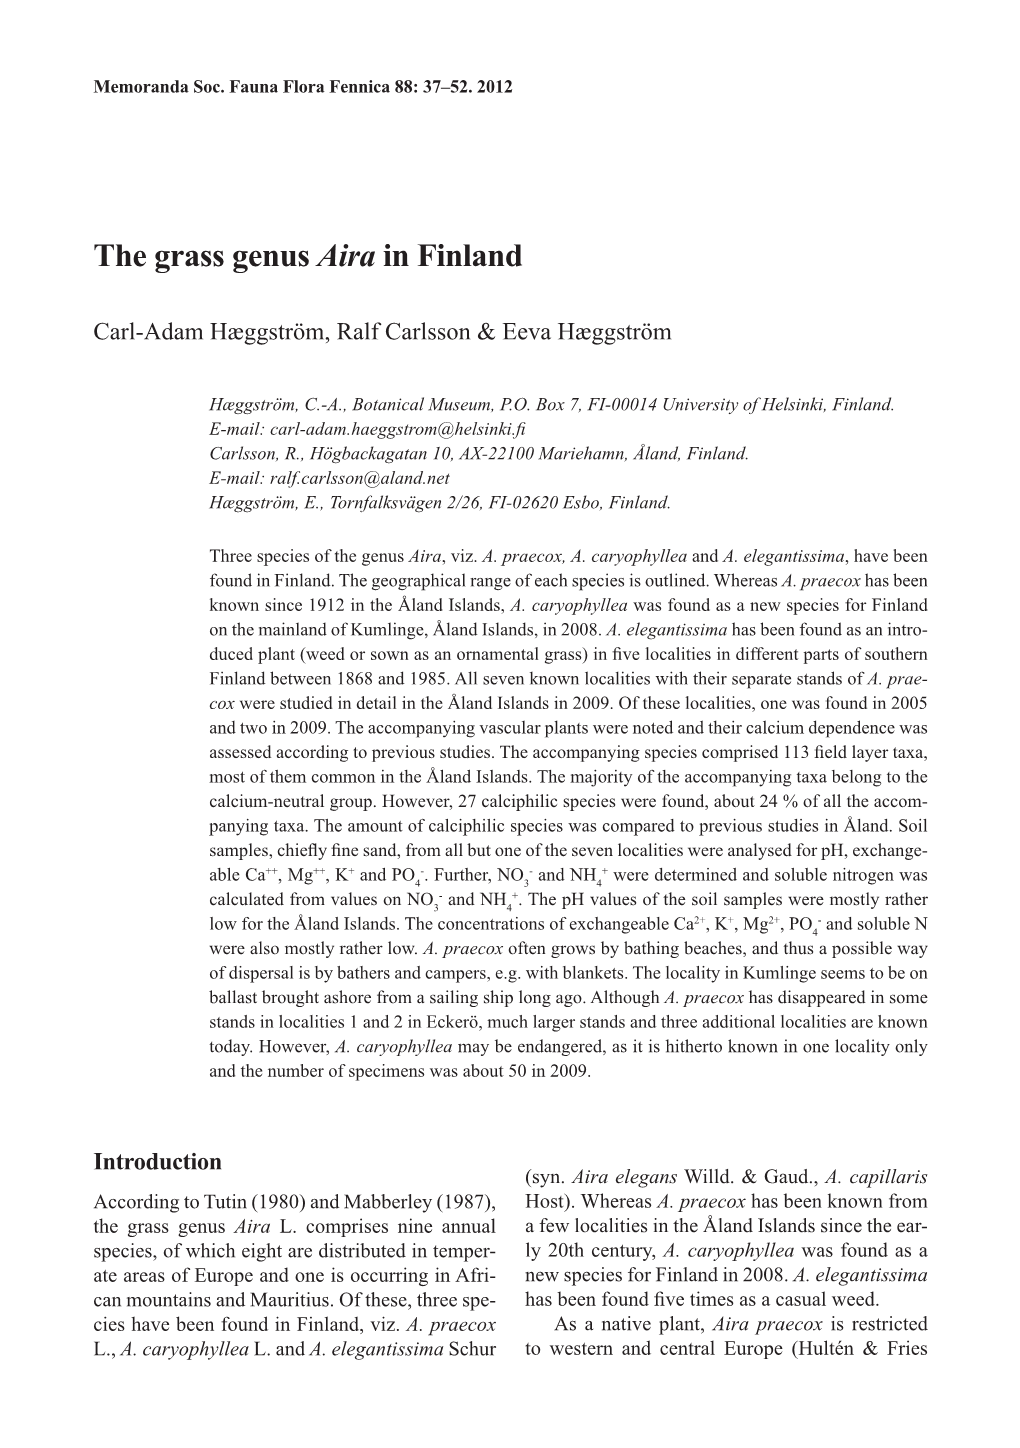 The Grass Genus Aira in Finland